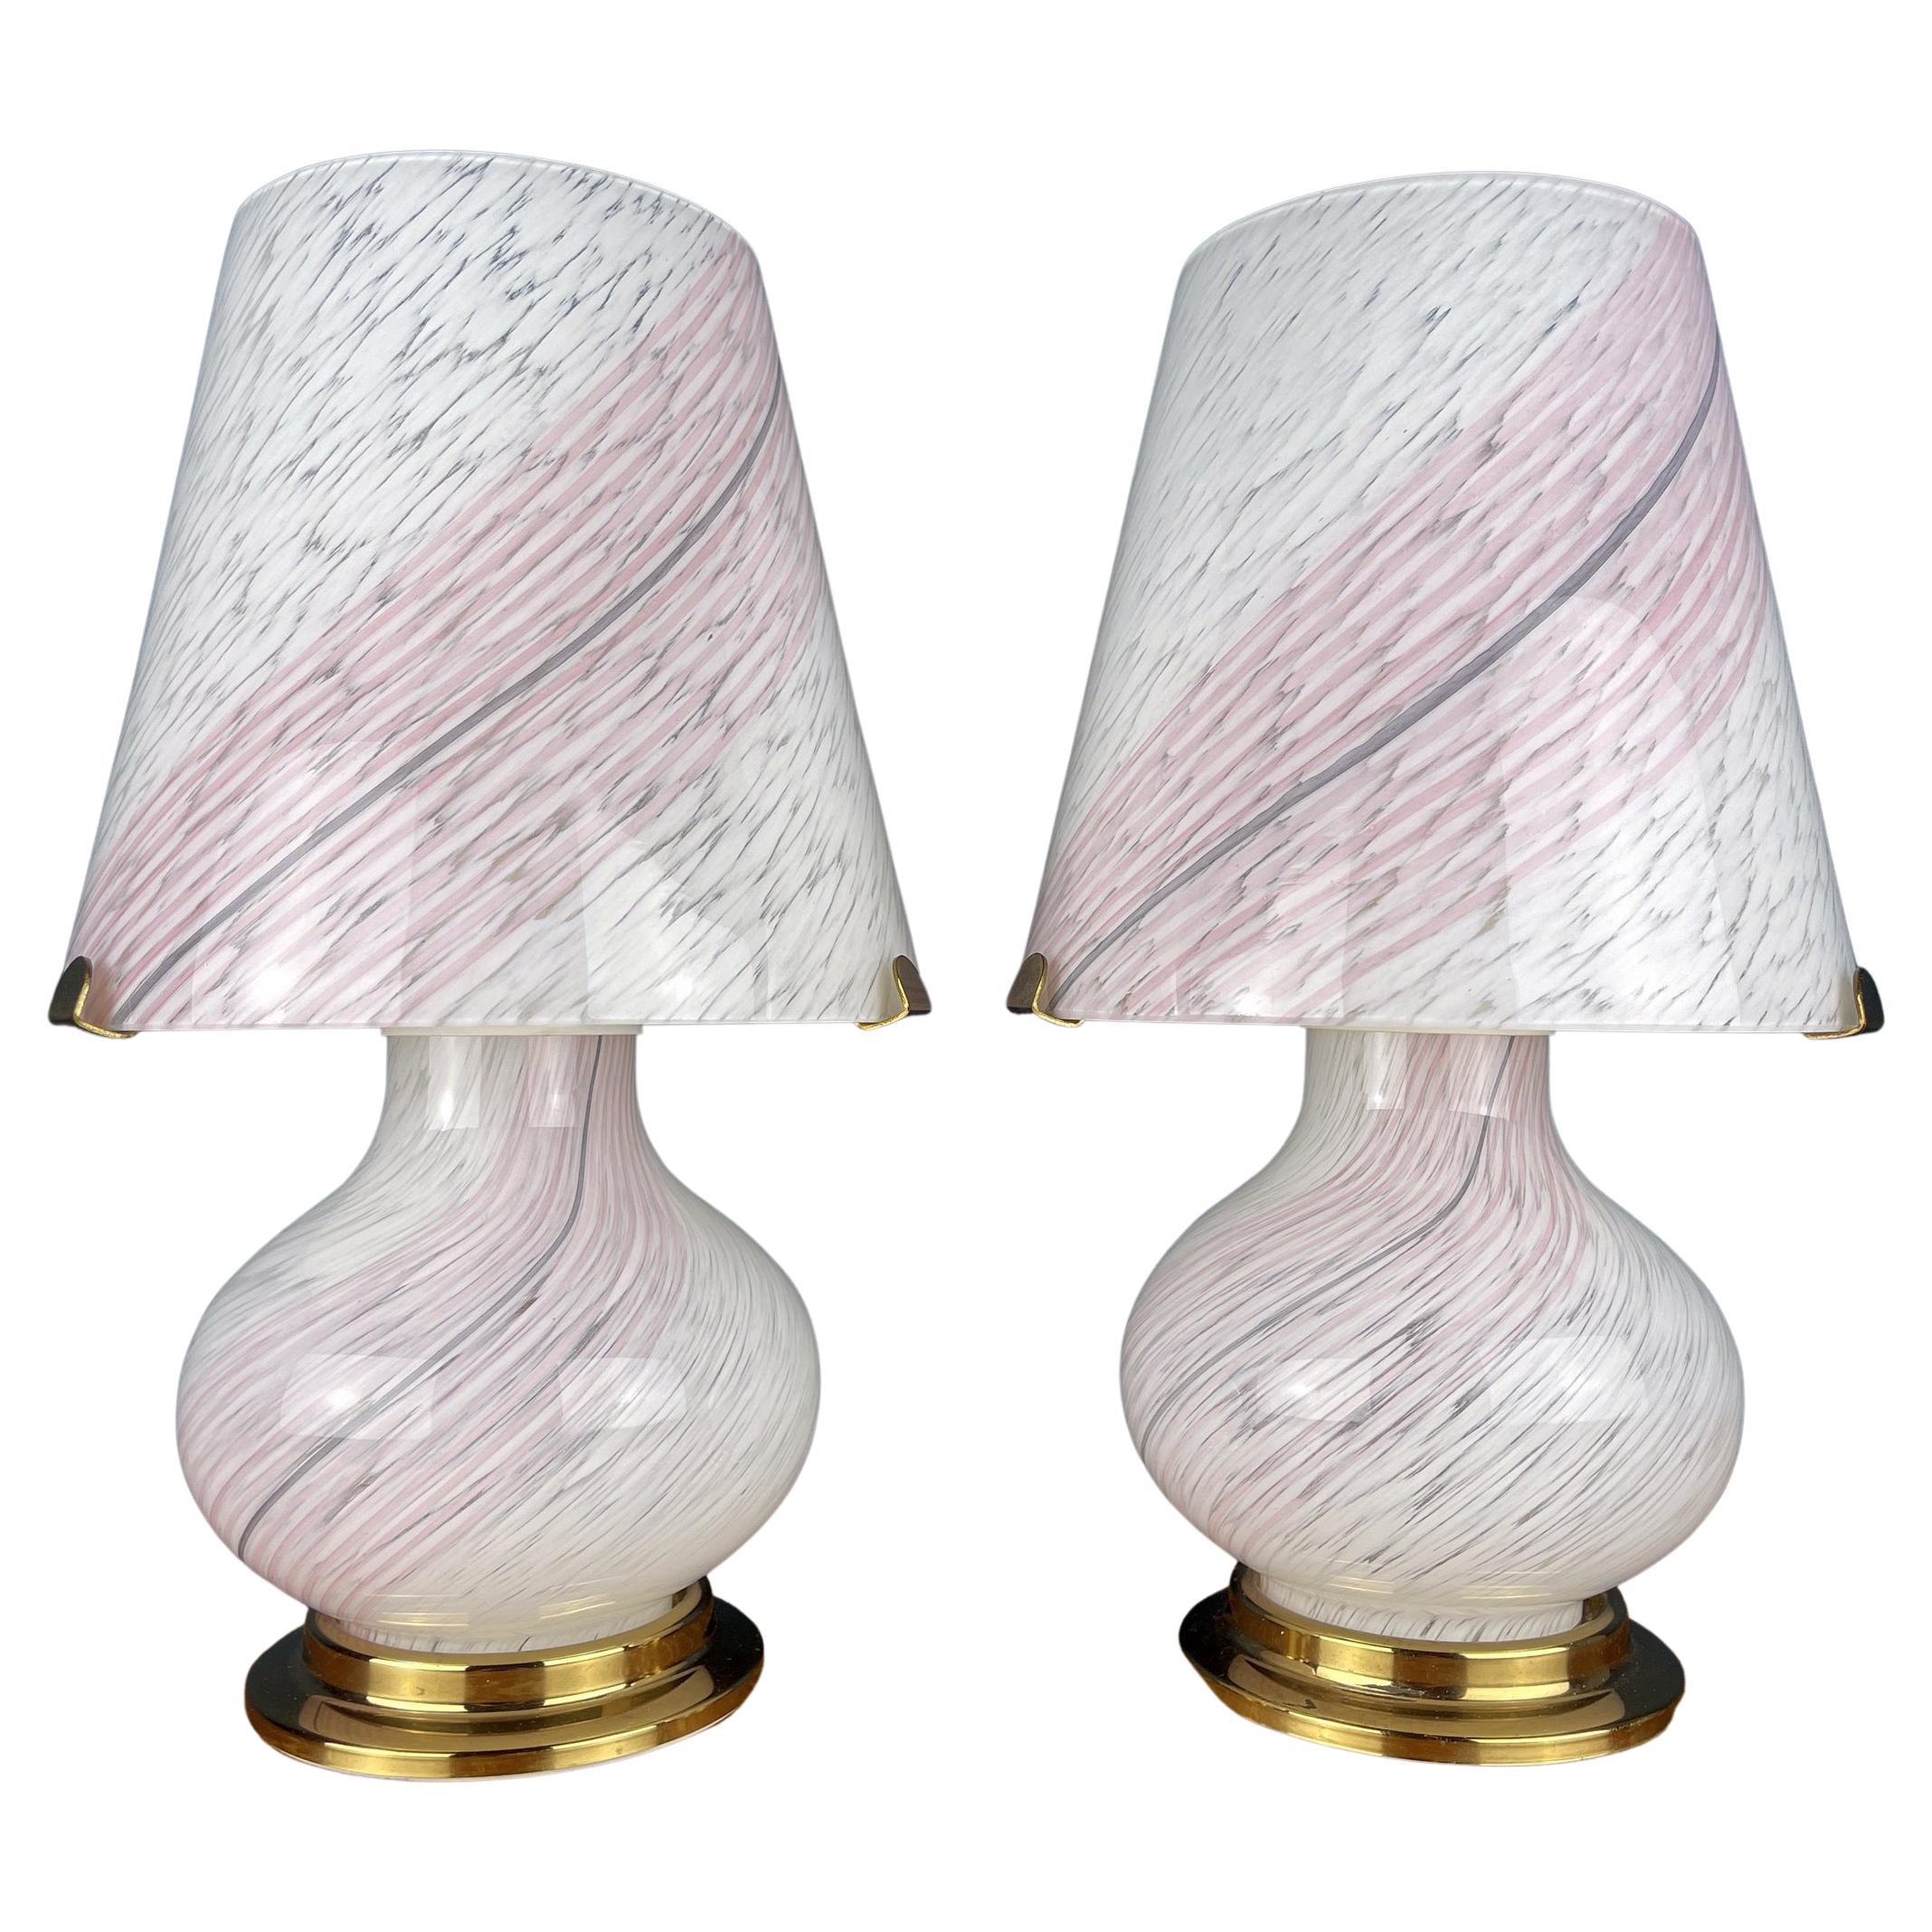 Details about   RARE Vtg Mid Century Italy Murano Beige gold fleck Art Glass Mushroom Table Lamp 